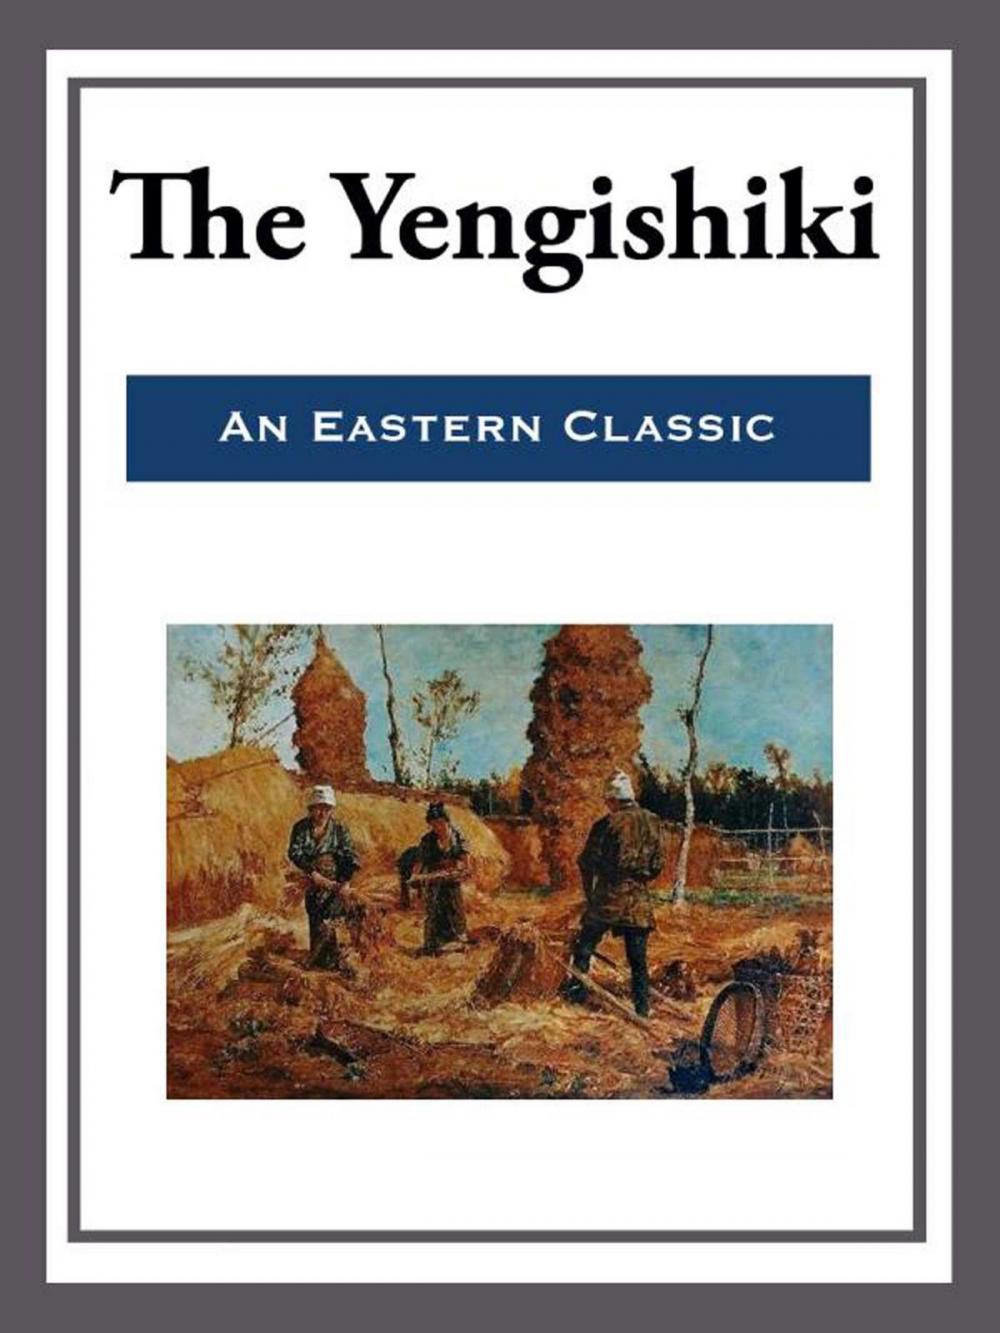 Big bigCover of The Yengishiki/The Englishiki